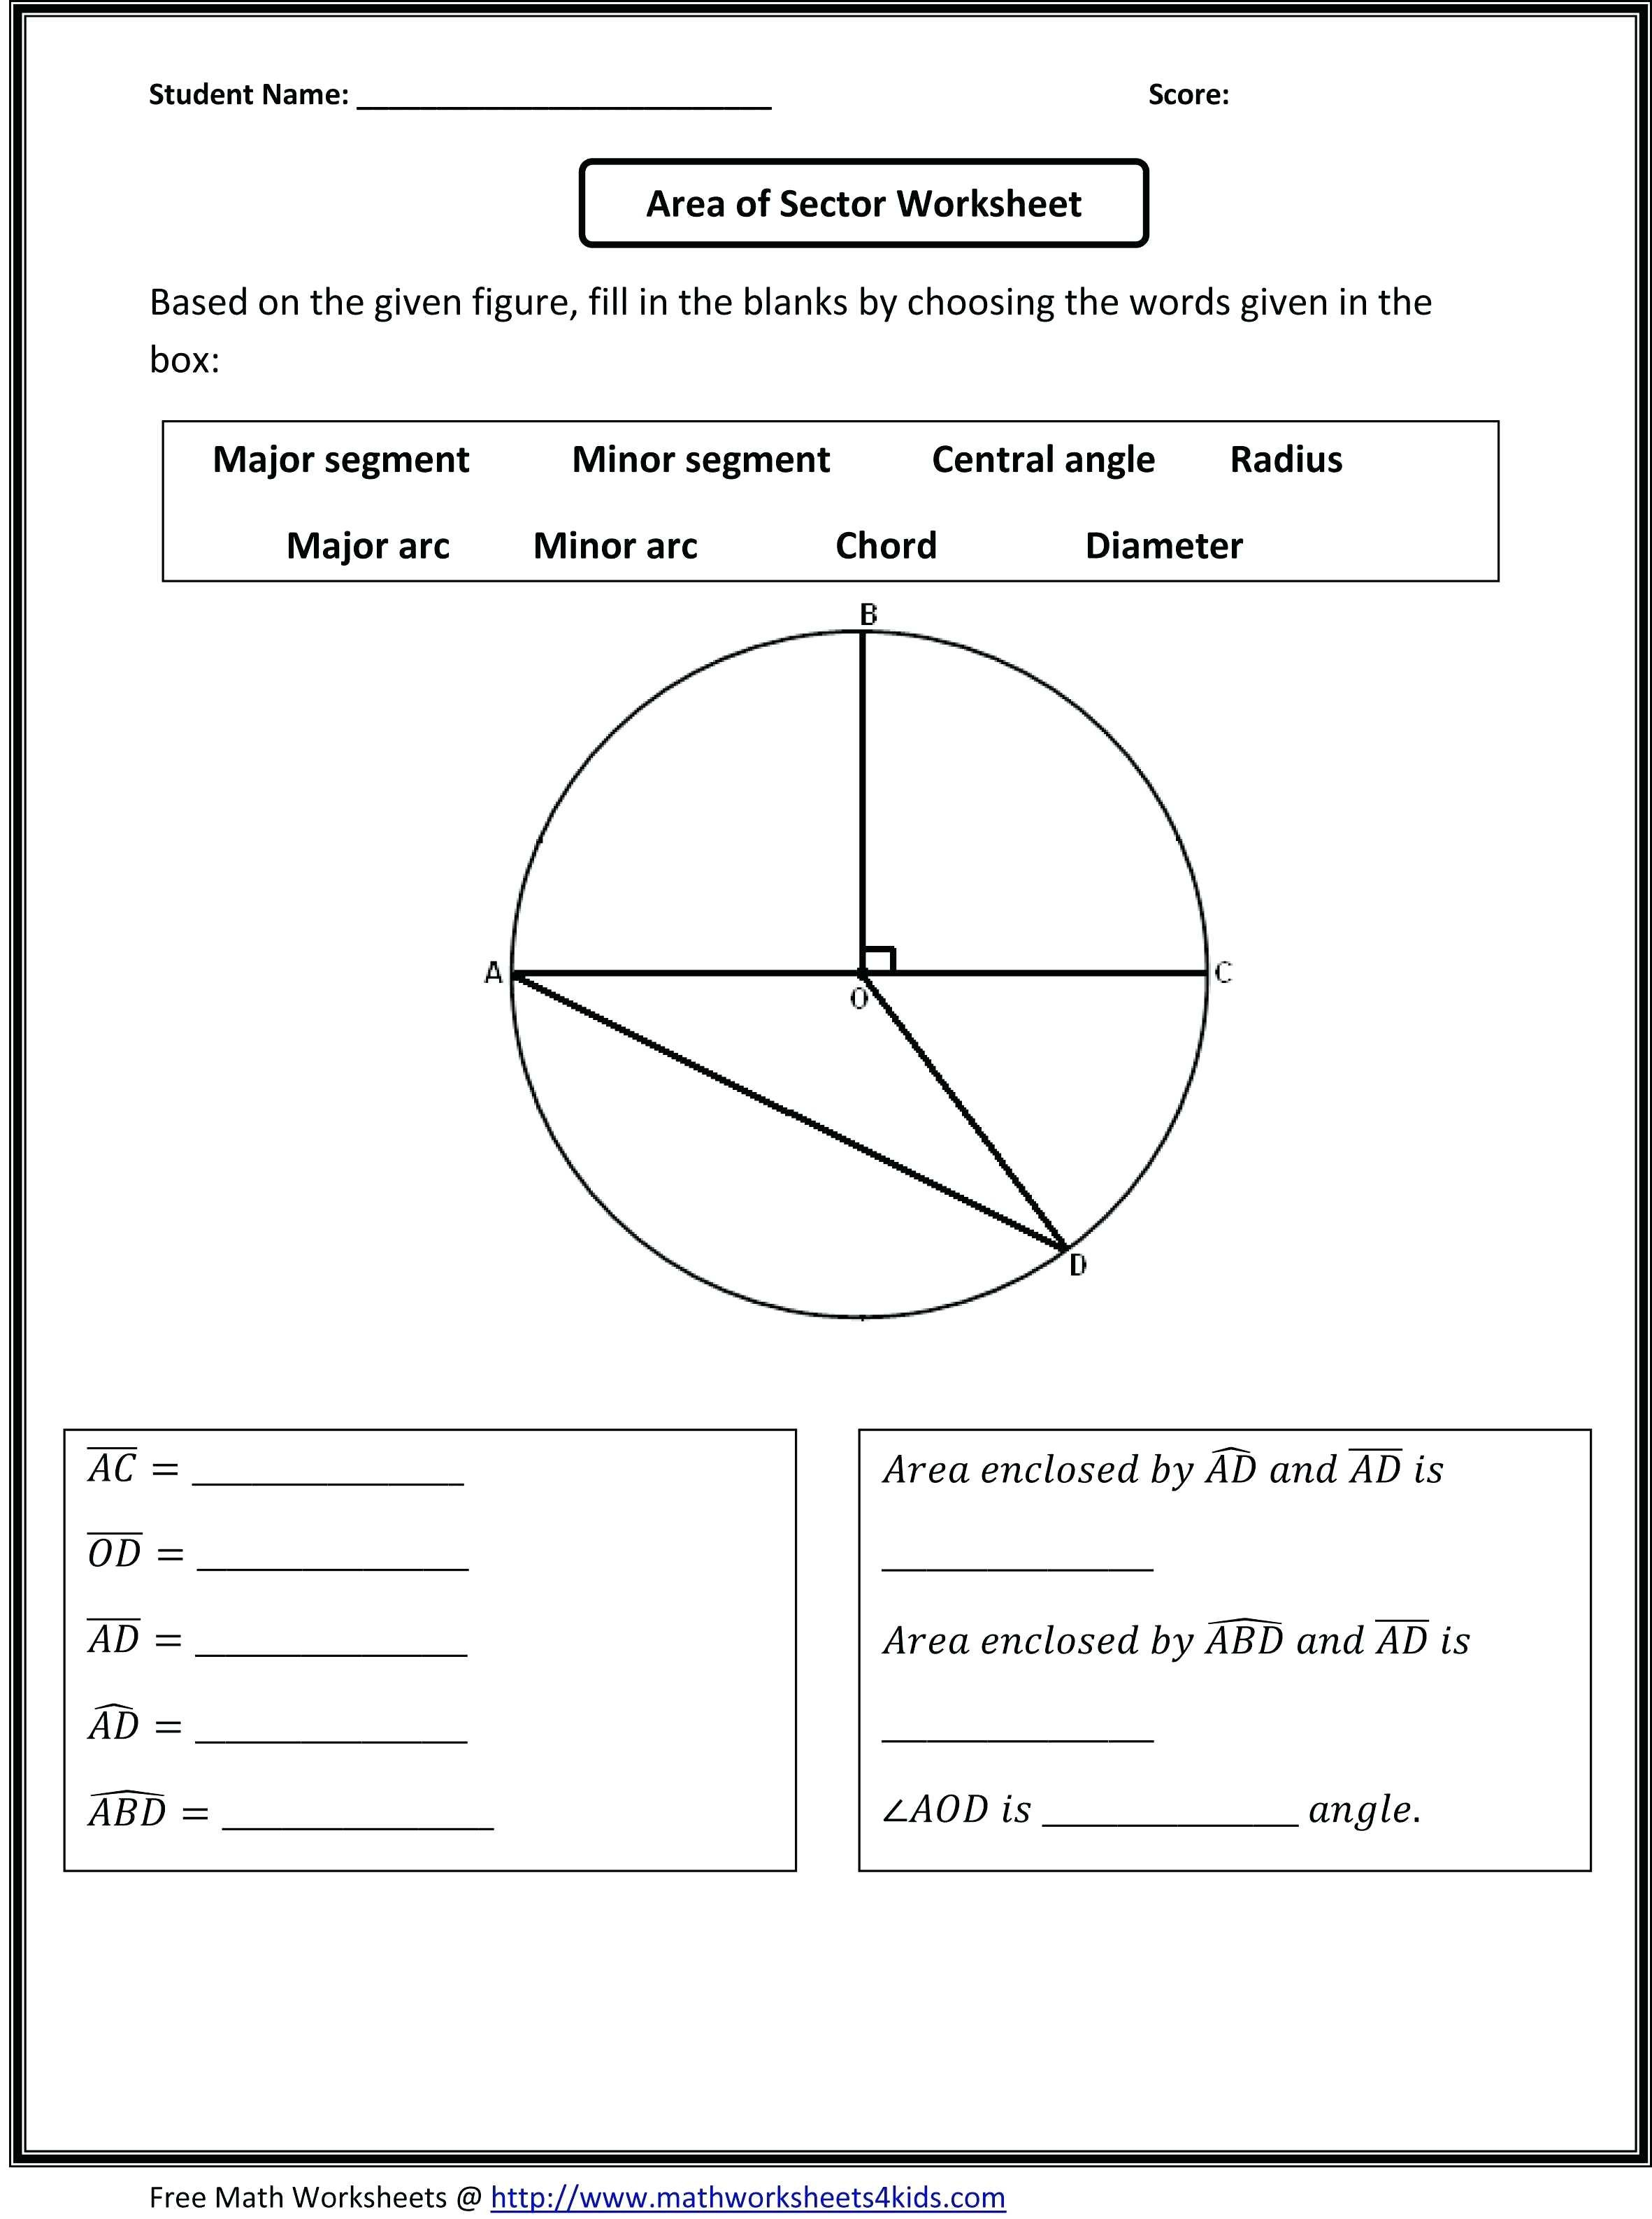 Parallelogram Worksheet Answers Math – Sacredblueclub Or Geometry Parallelogram Worksheet Answers